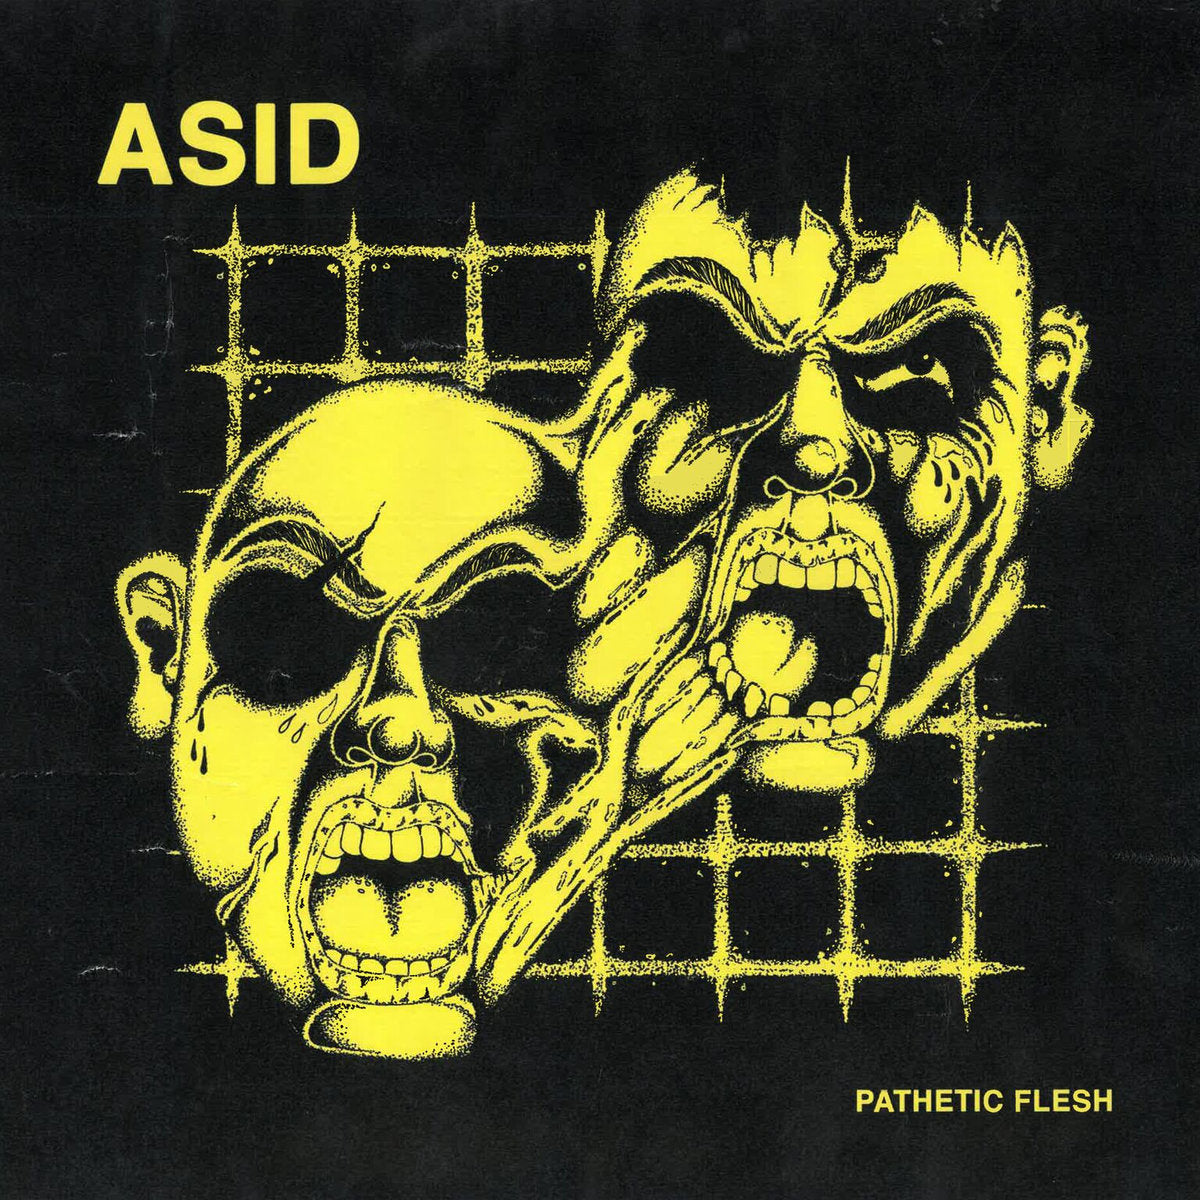 ASID - "PATHETIC FLESH" LP